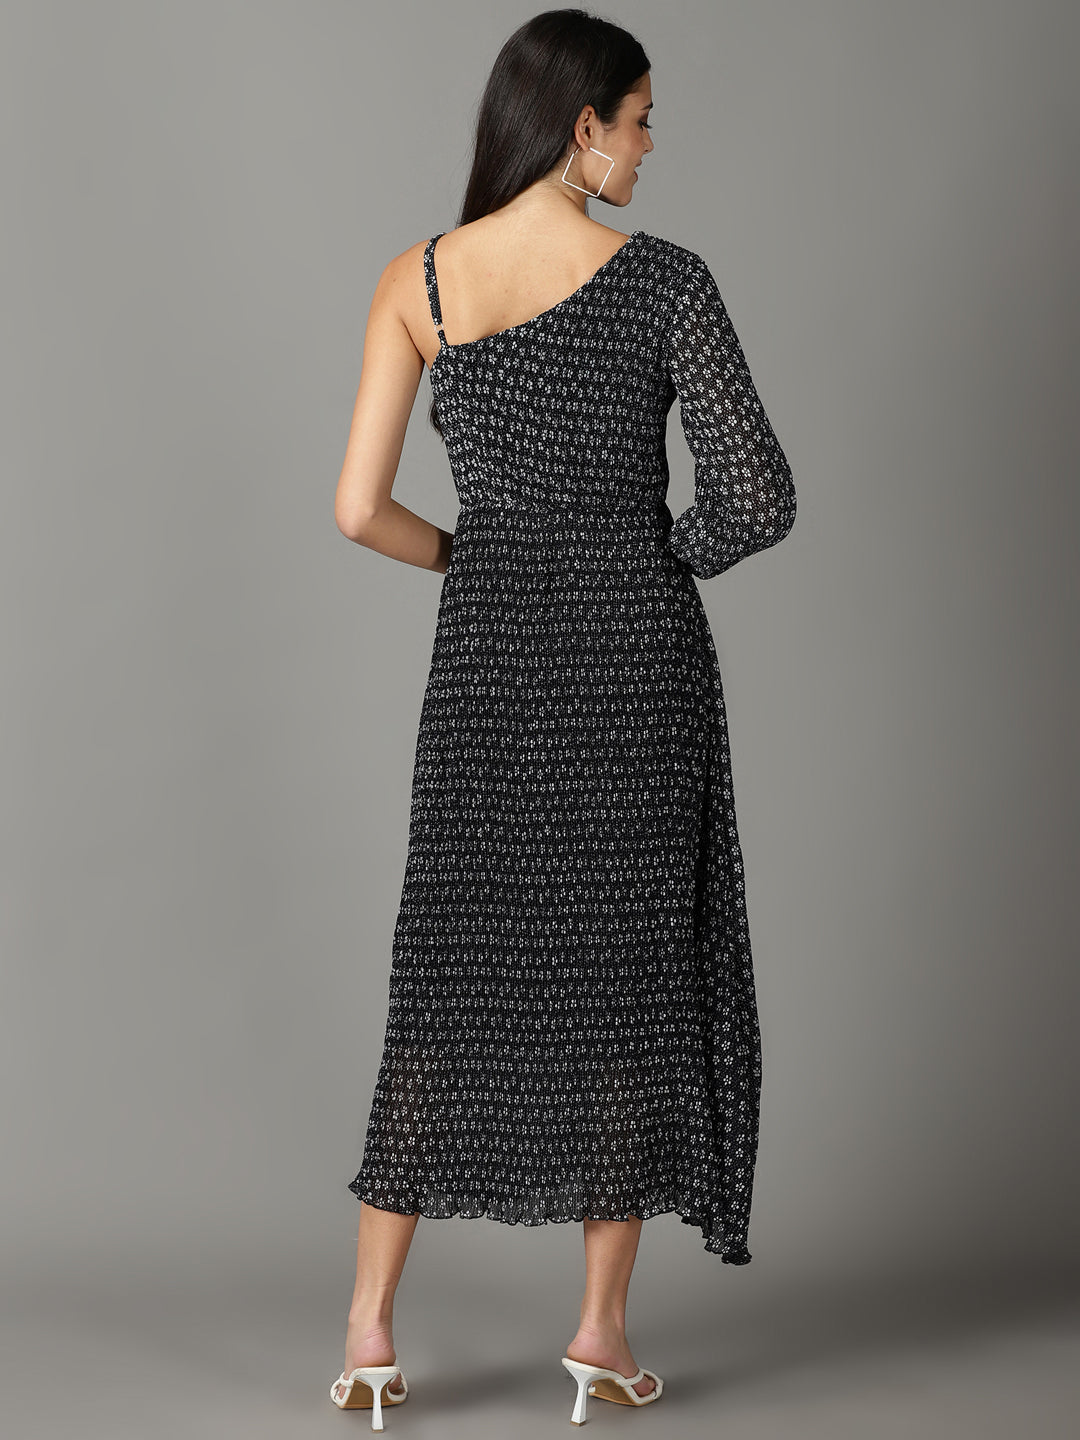 Women's Black Printed A-Line Dress